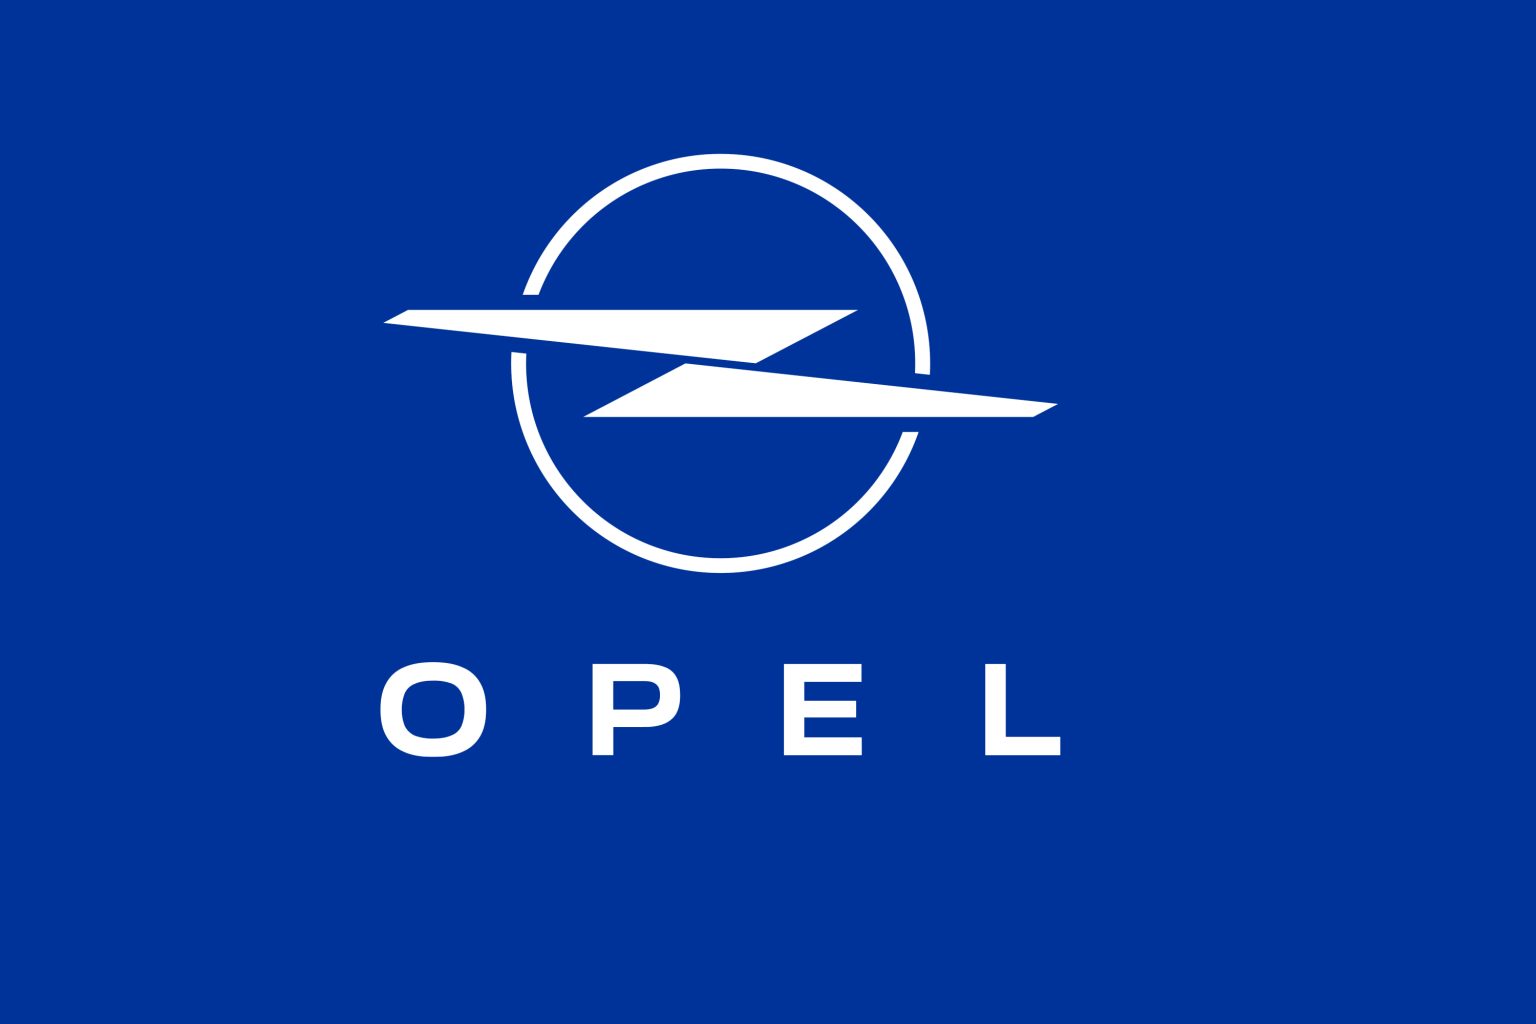 opel-logo-new-design-wallpaper-hipi-info